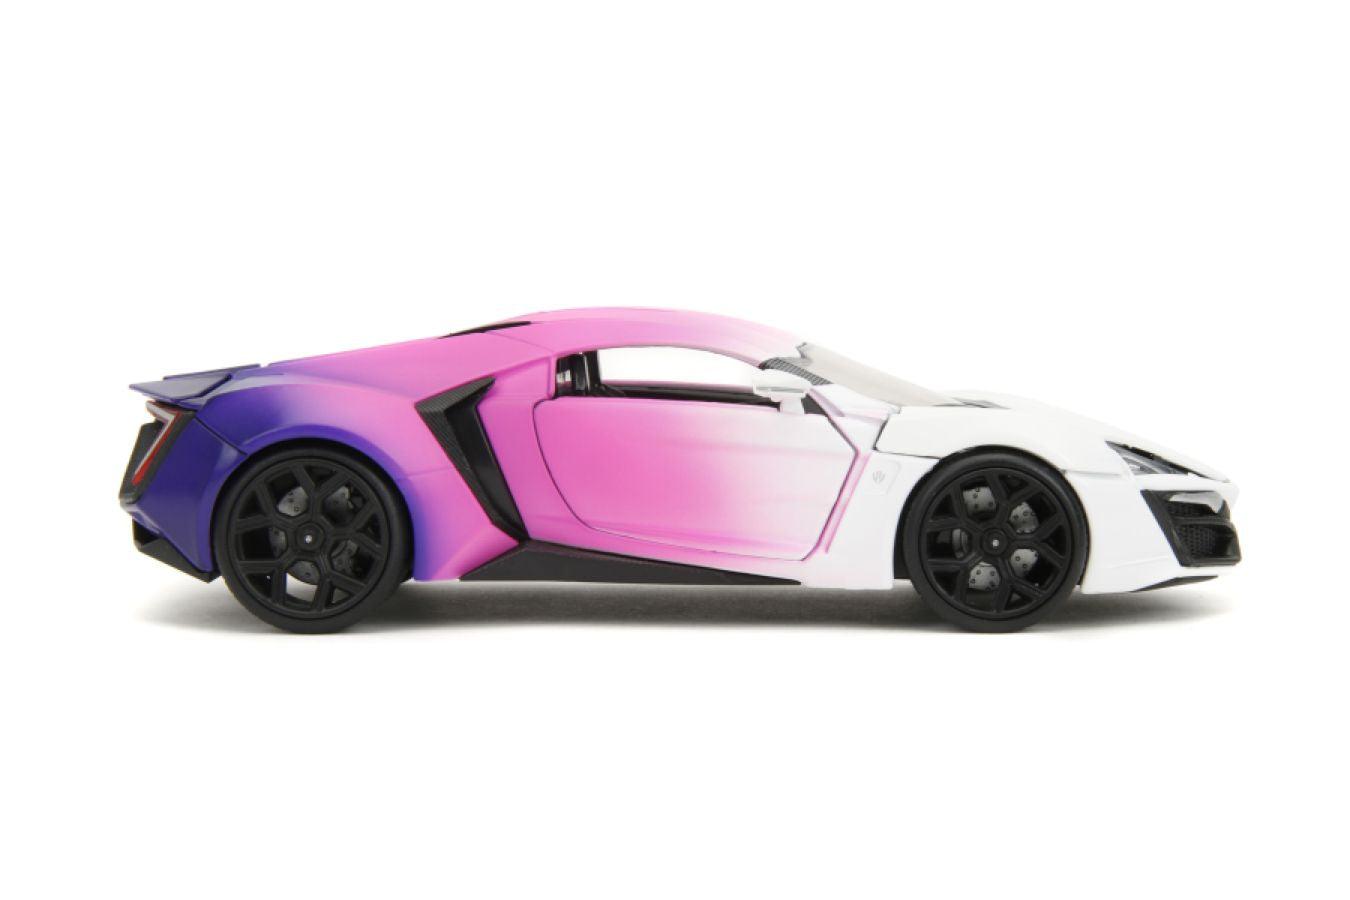  Pink Slips - Lykan Hypersport 1:24 Scale Diecast Vehicle - Jada Toys - Titan Pop Culture